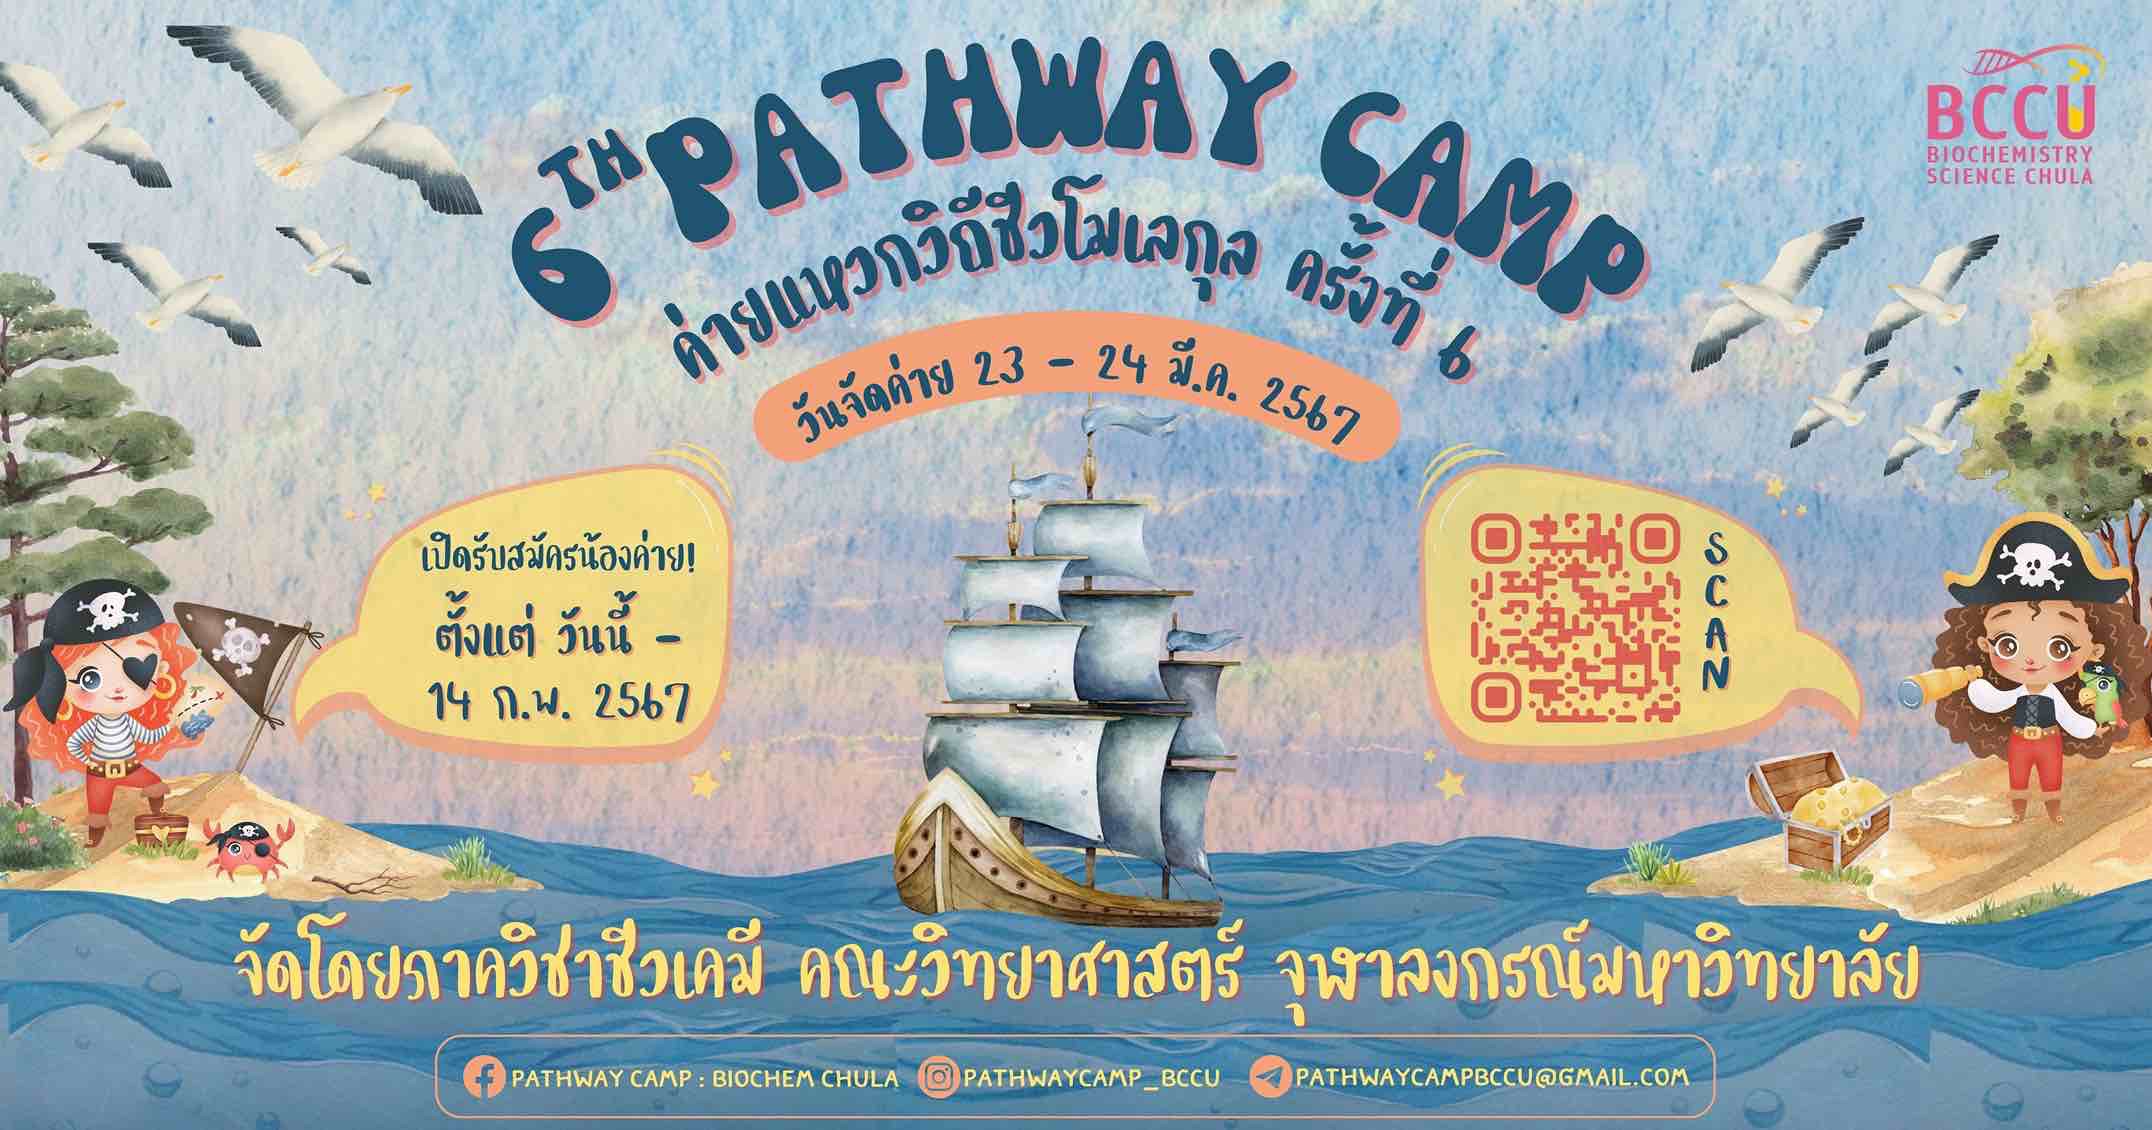 The 6th Pathway Camp ค่ายแหวกวิถีชีวโมเลกุล ครั้งที่ 6